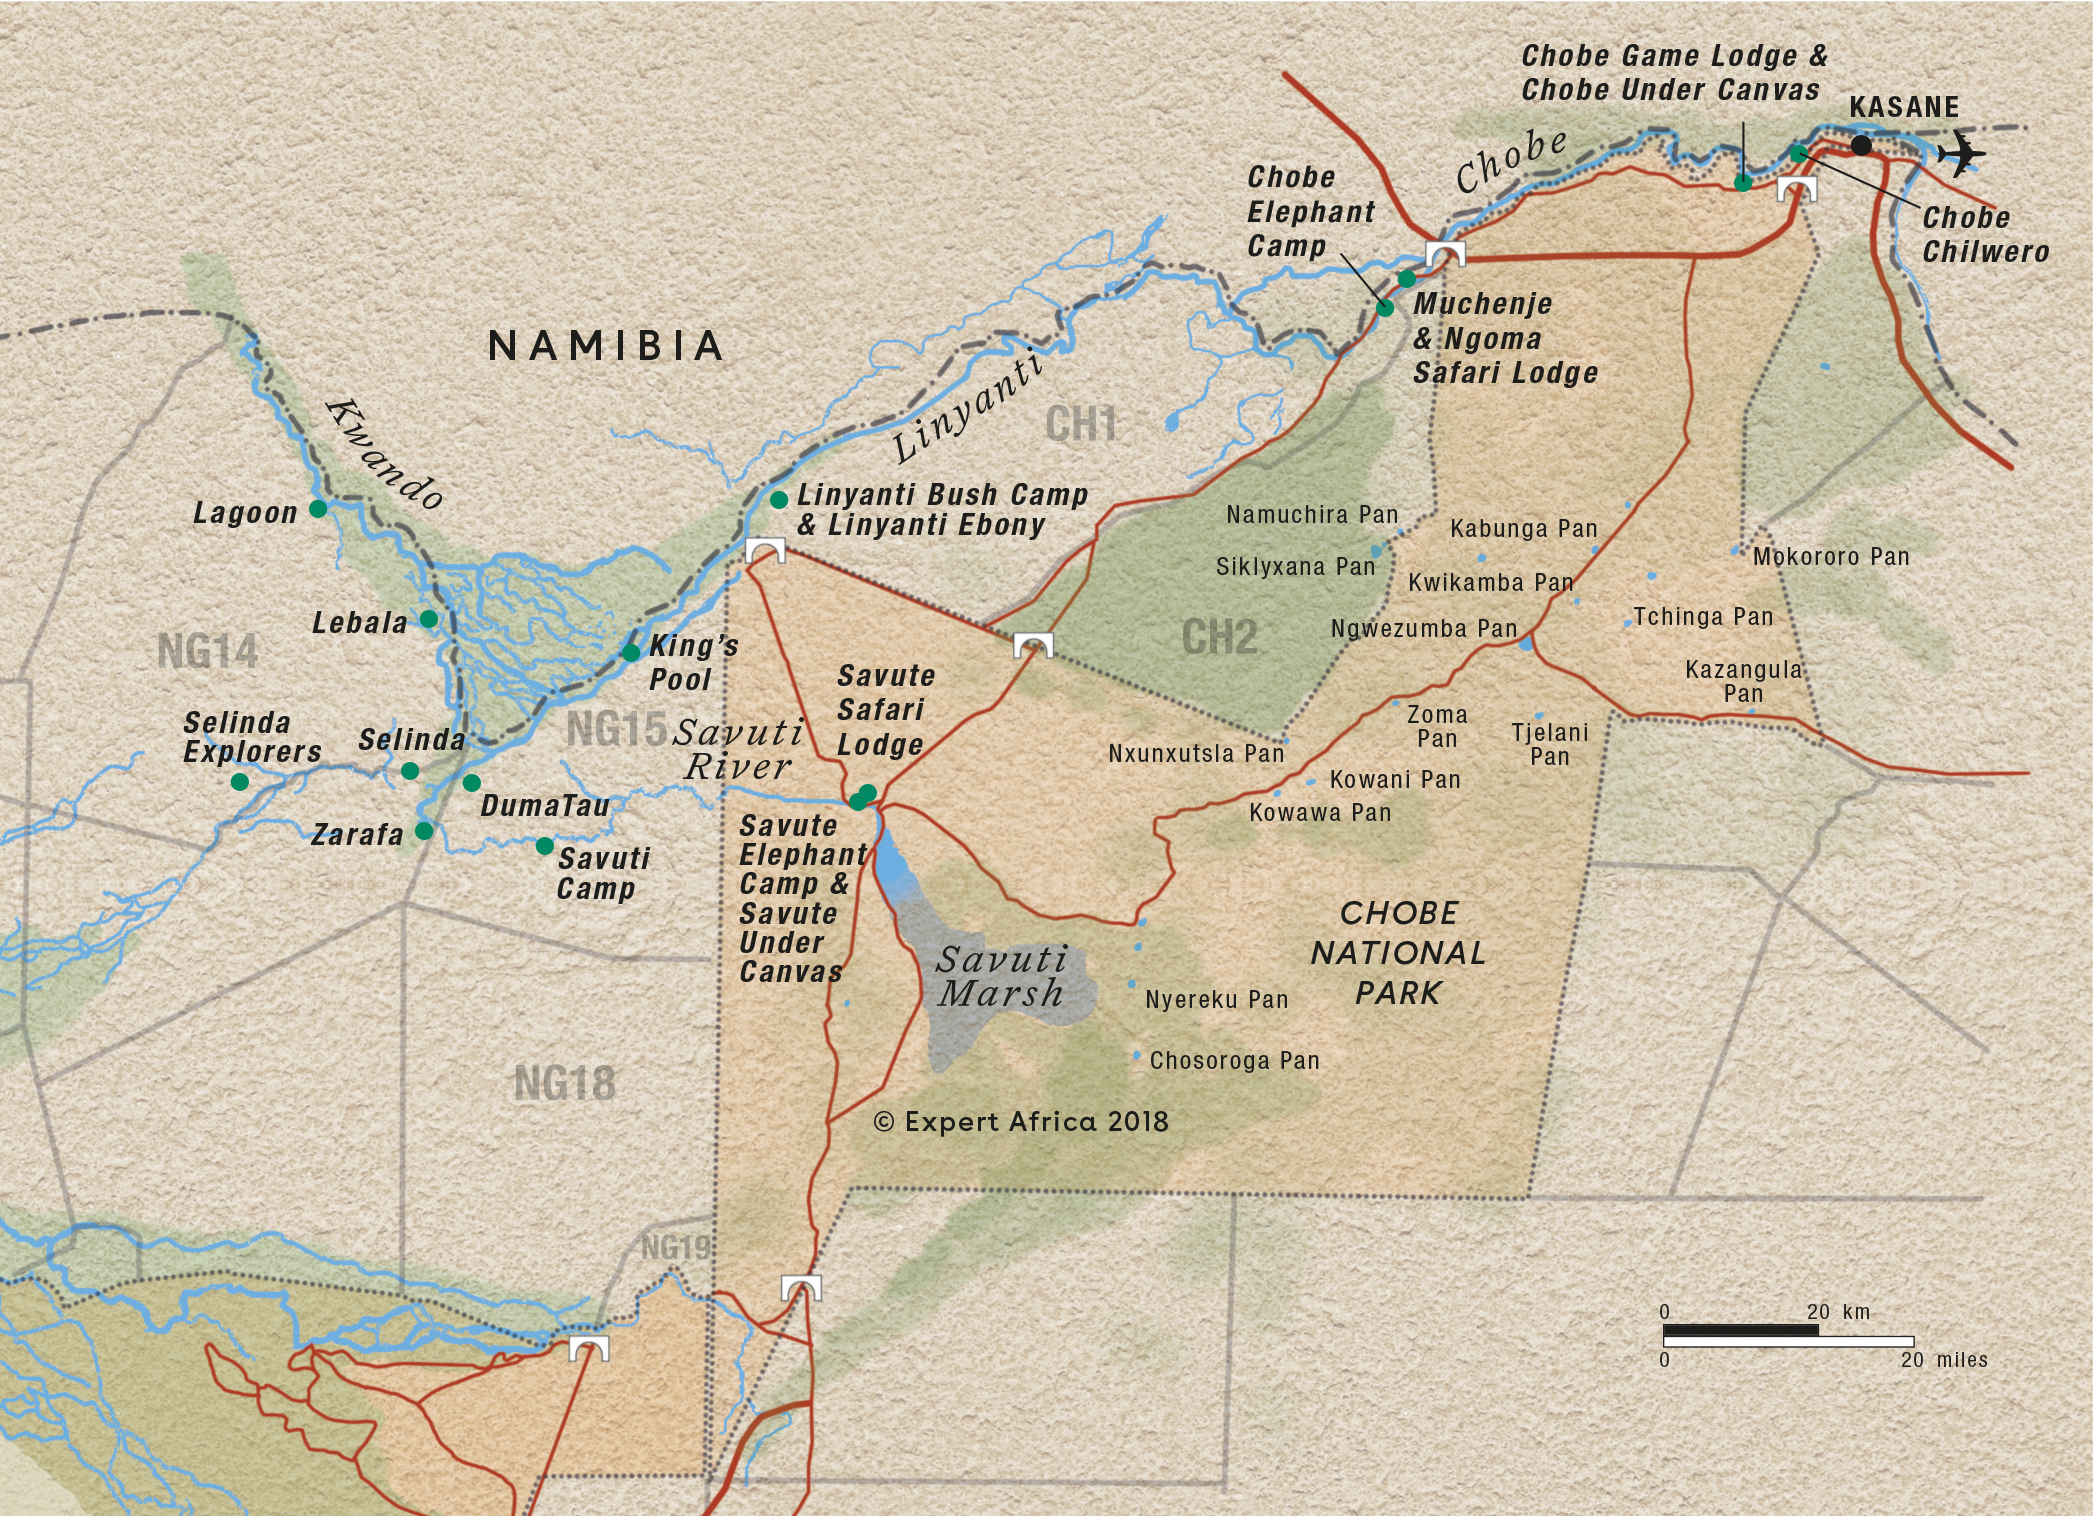 Chone National Park Map